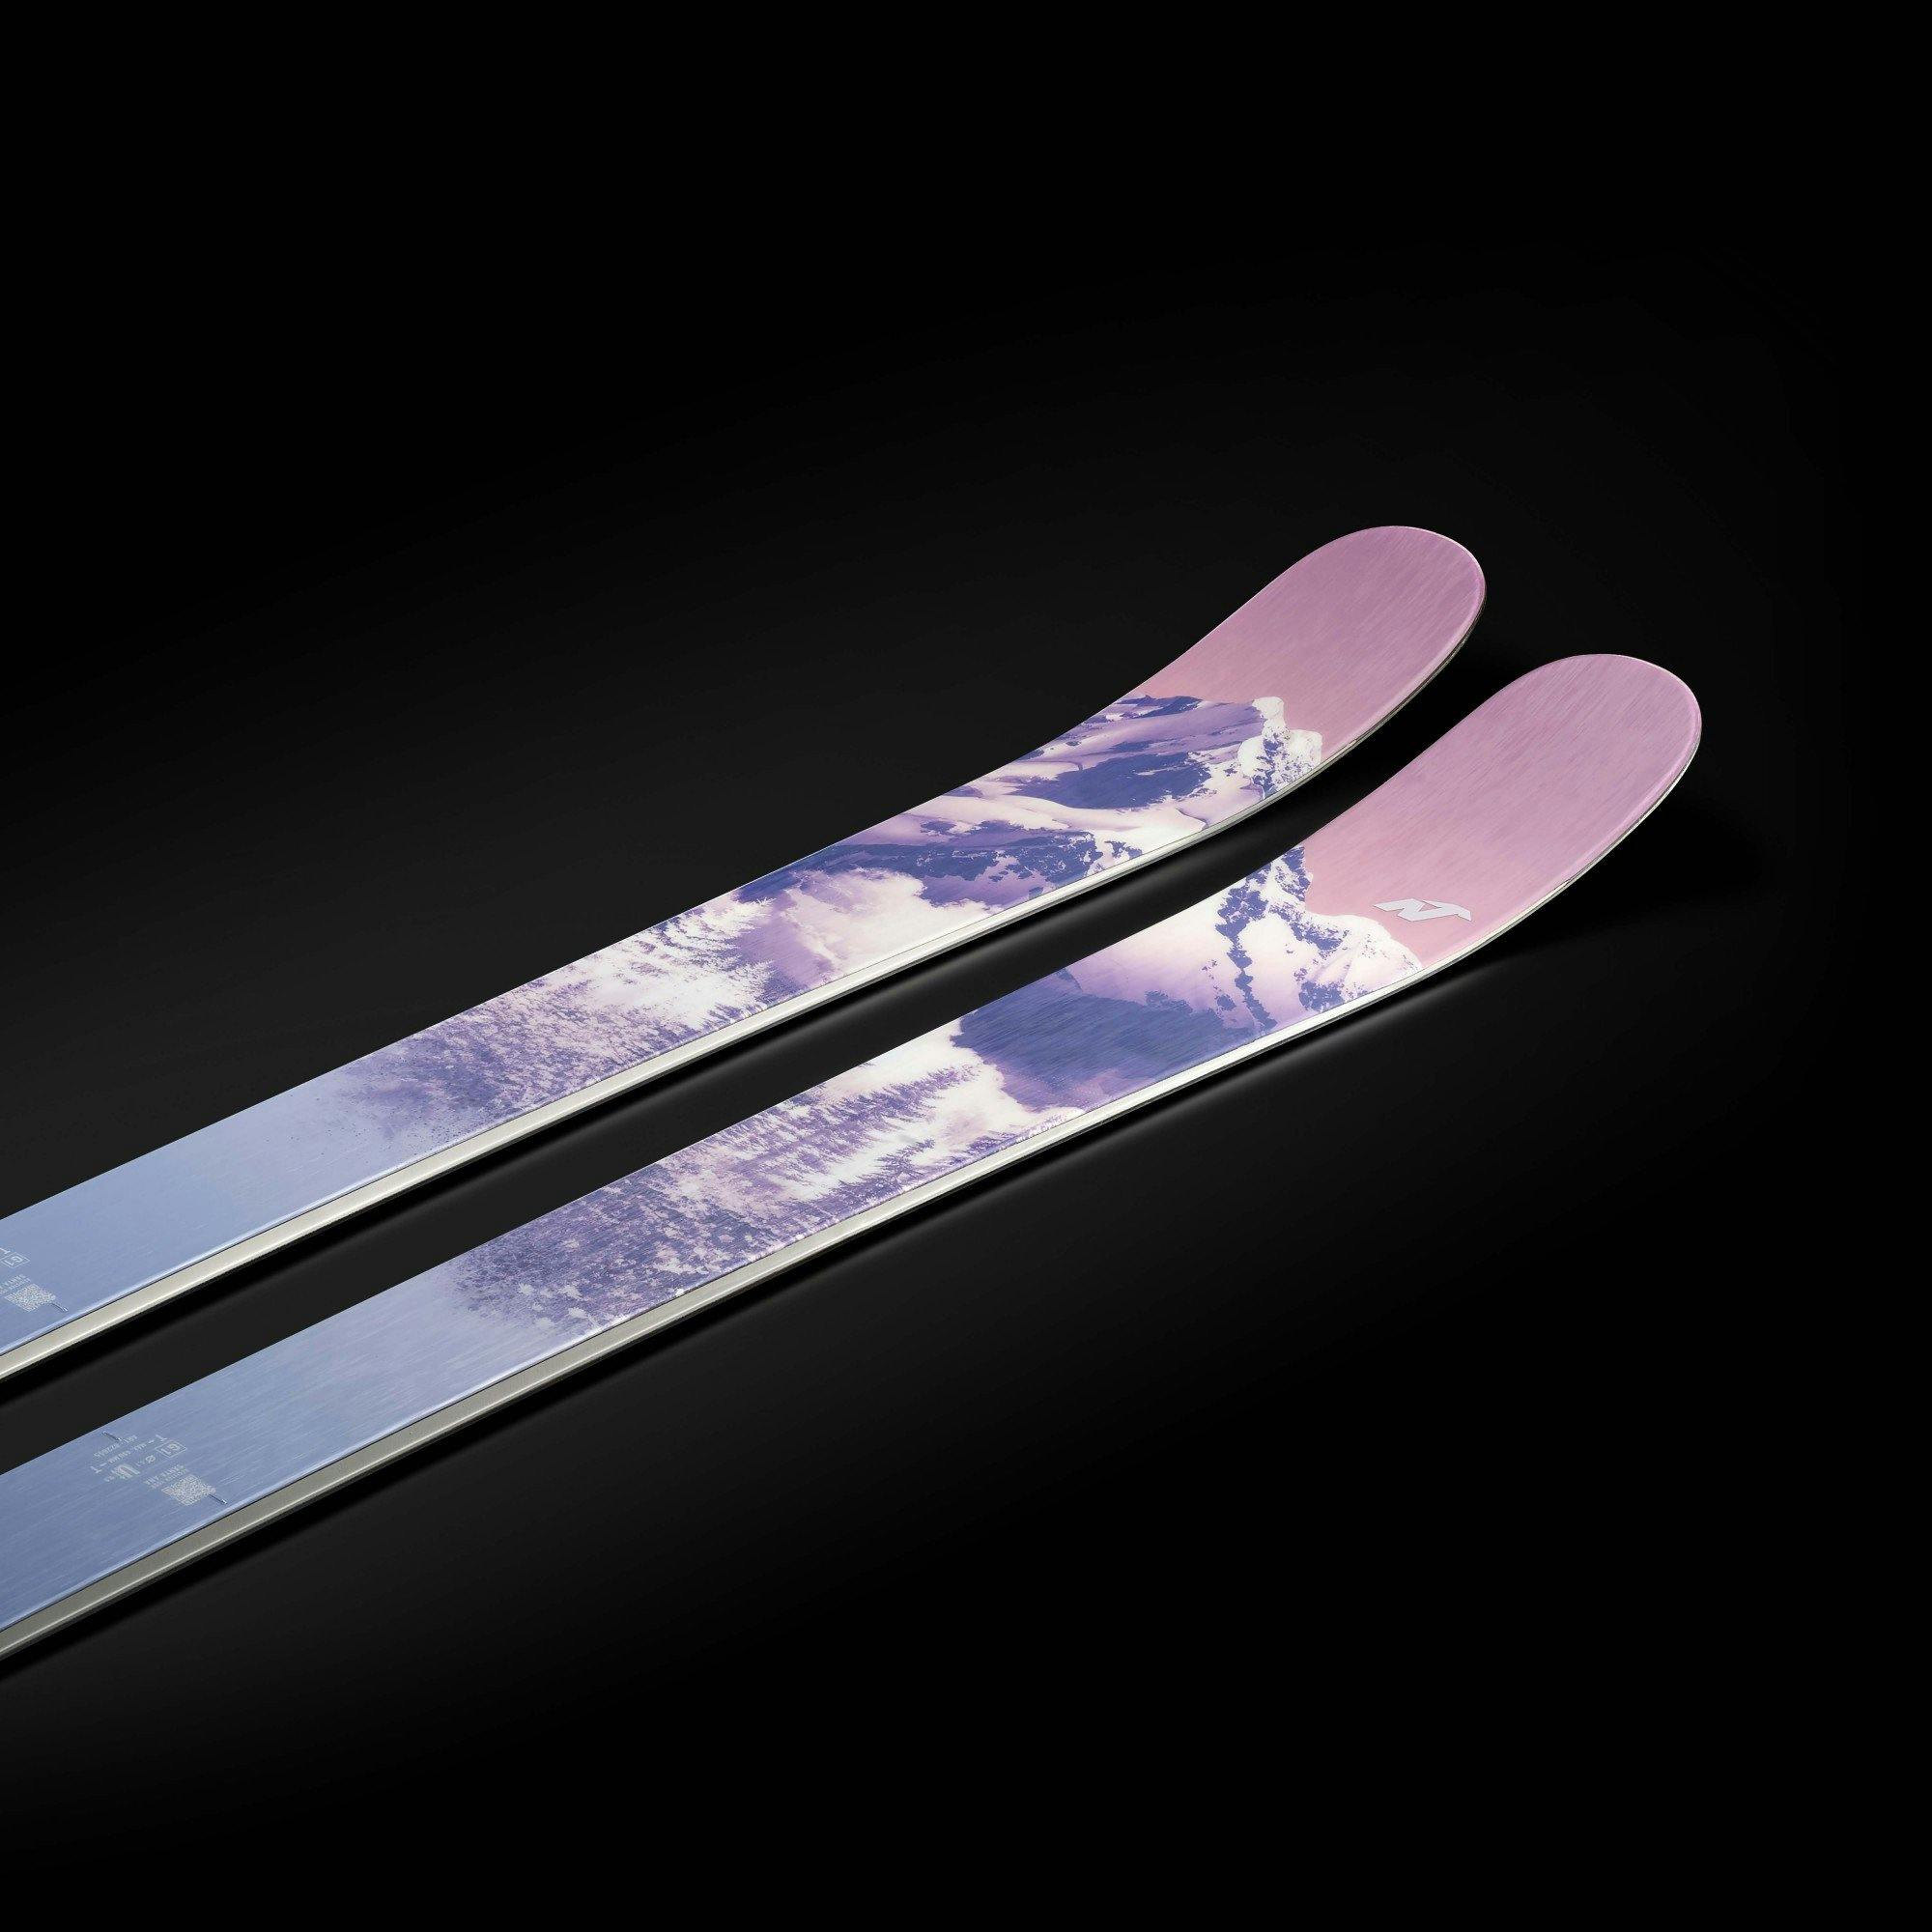 Nordica Santa Ana 88 Skis · Women's · 2022 · 165 cm